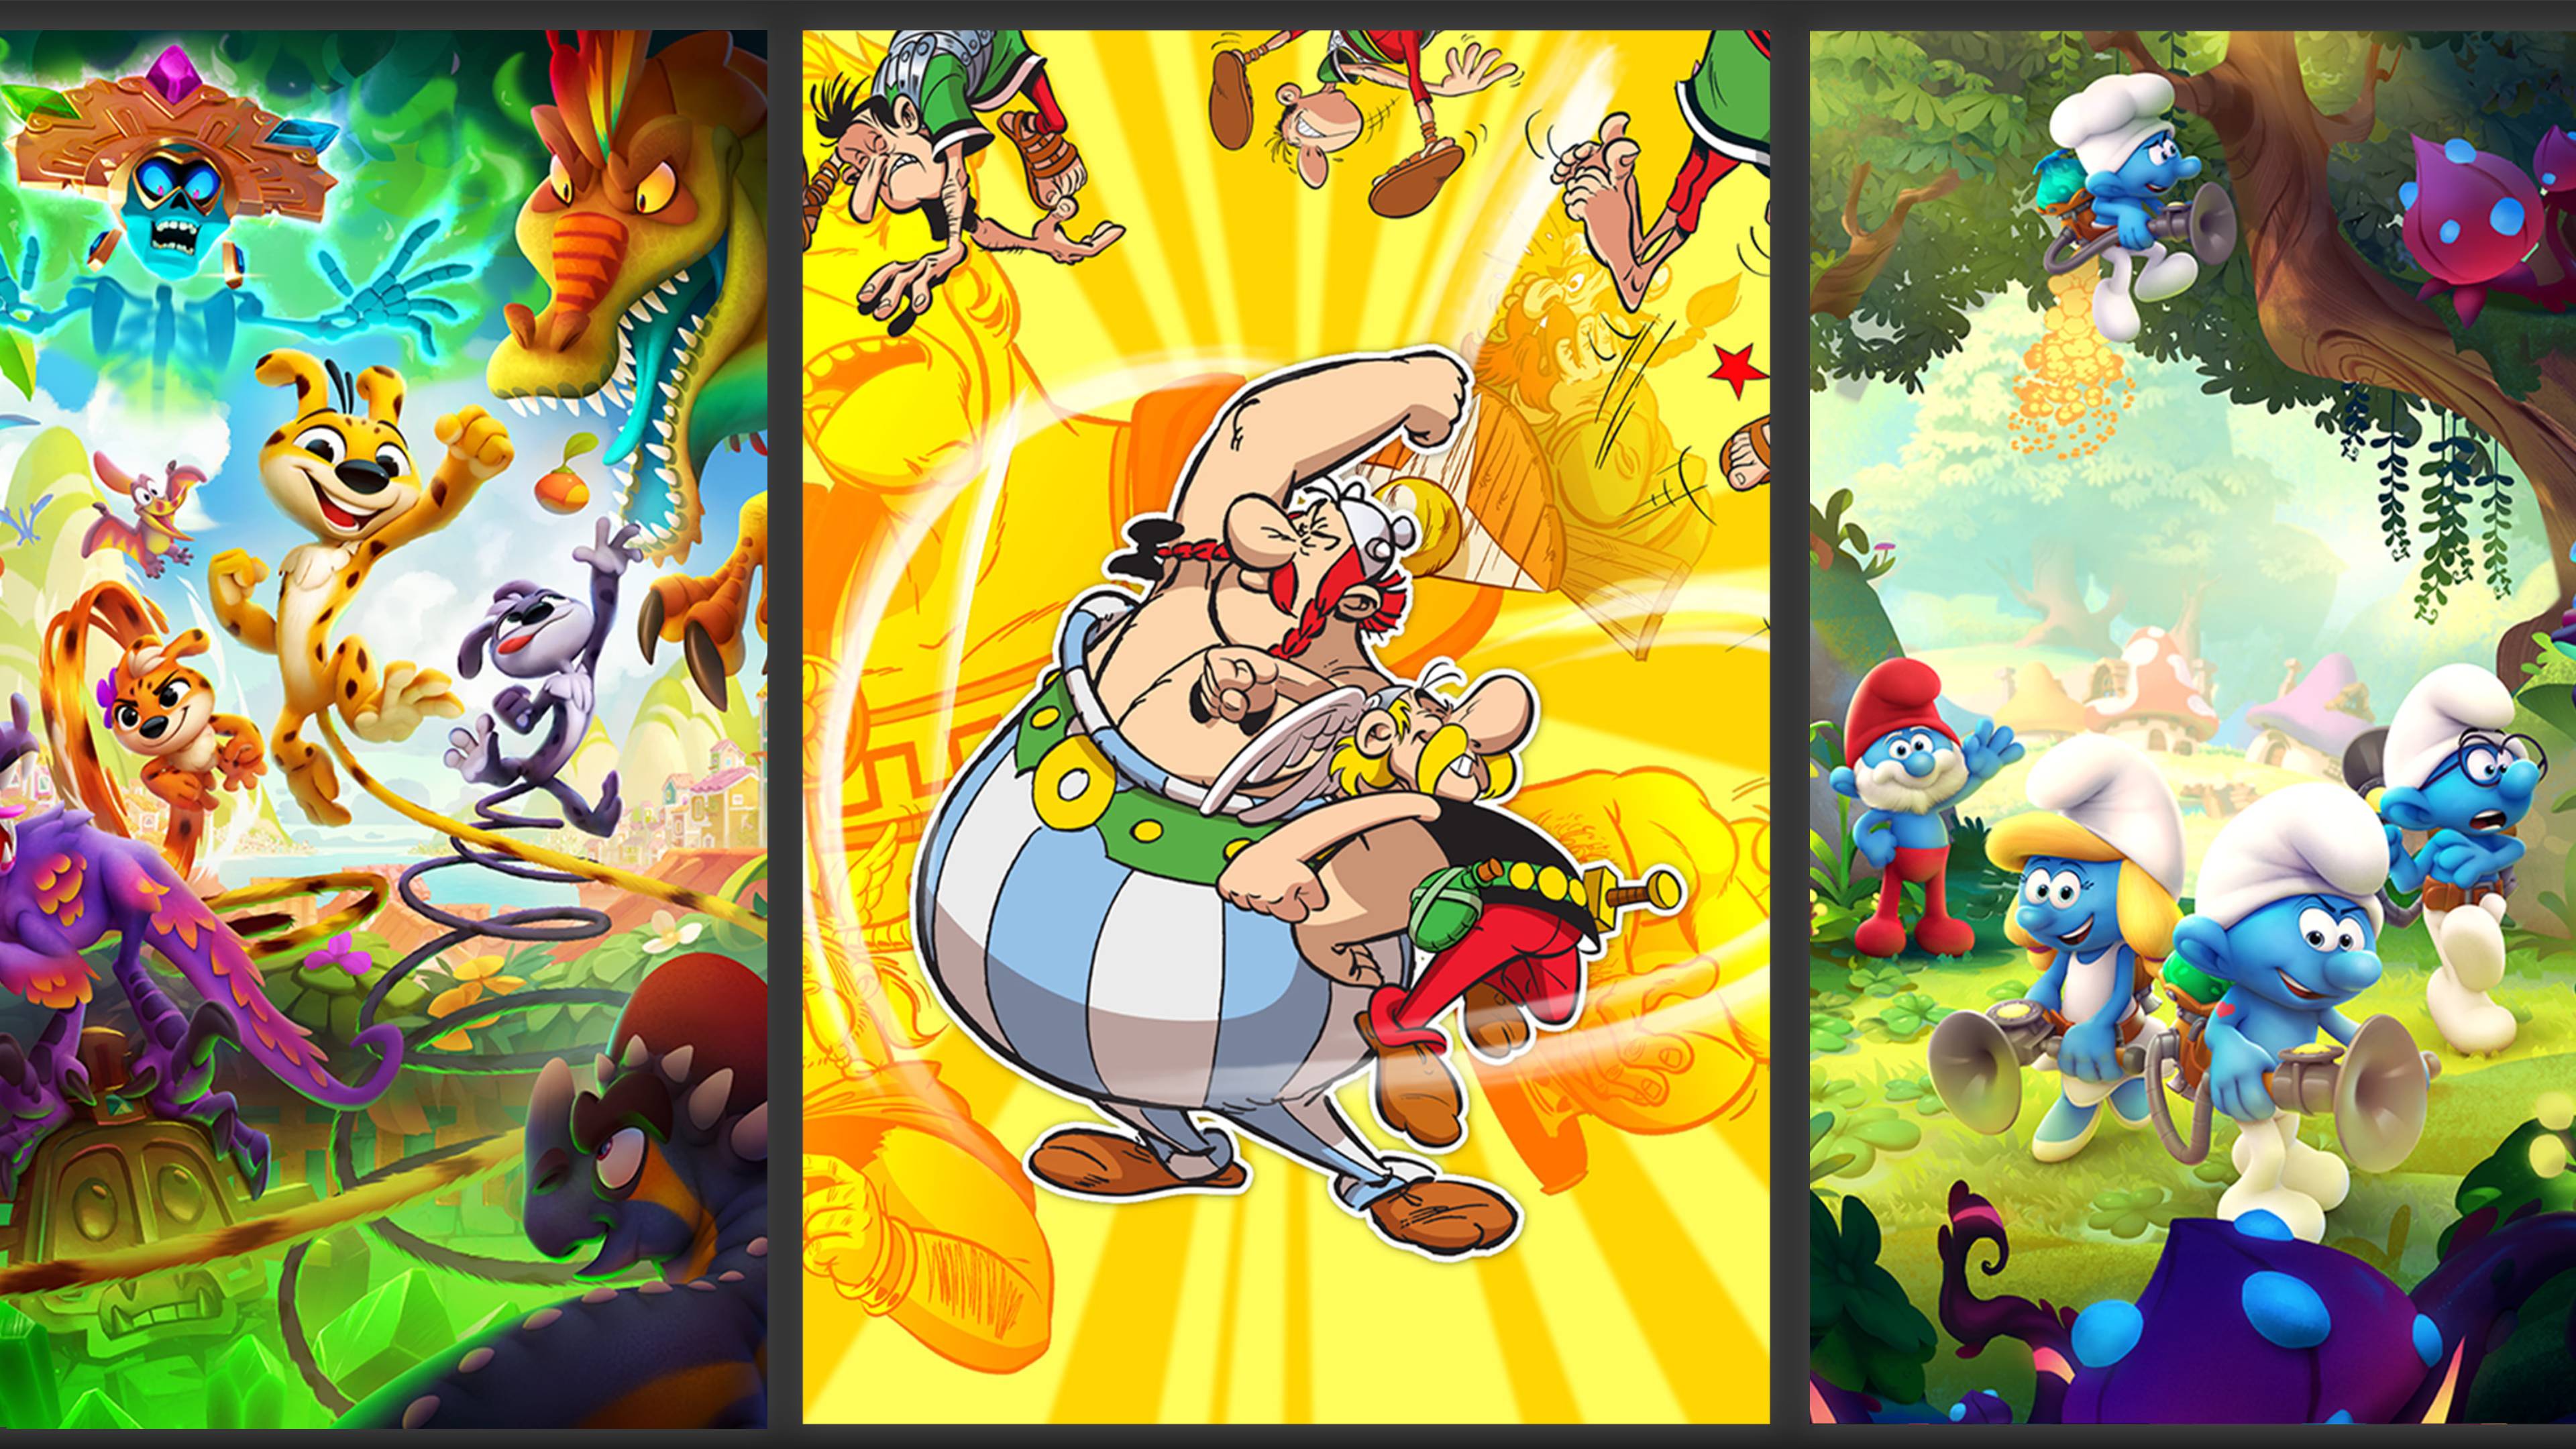 Back to Childhood: Classic Games Collection - Marsupilami - Hoobadventure, Asterix & Obelix: Slap'Them All!, The Smurfs - Mission Vileaf Bundle